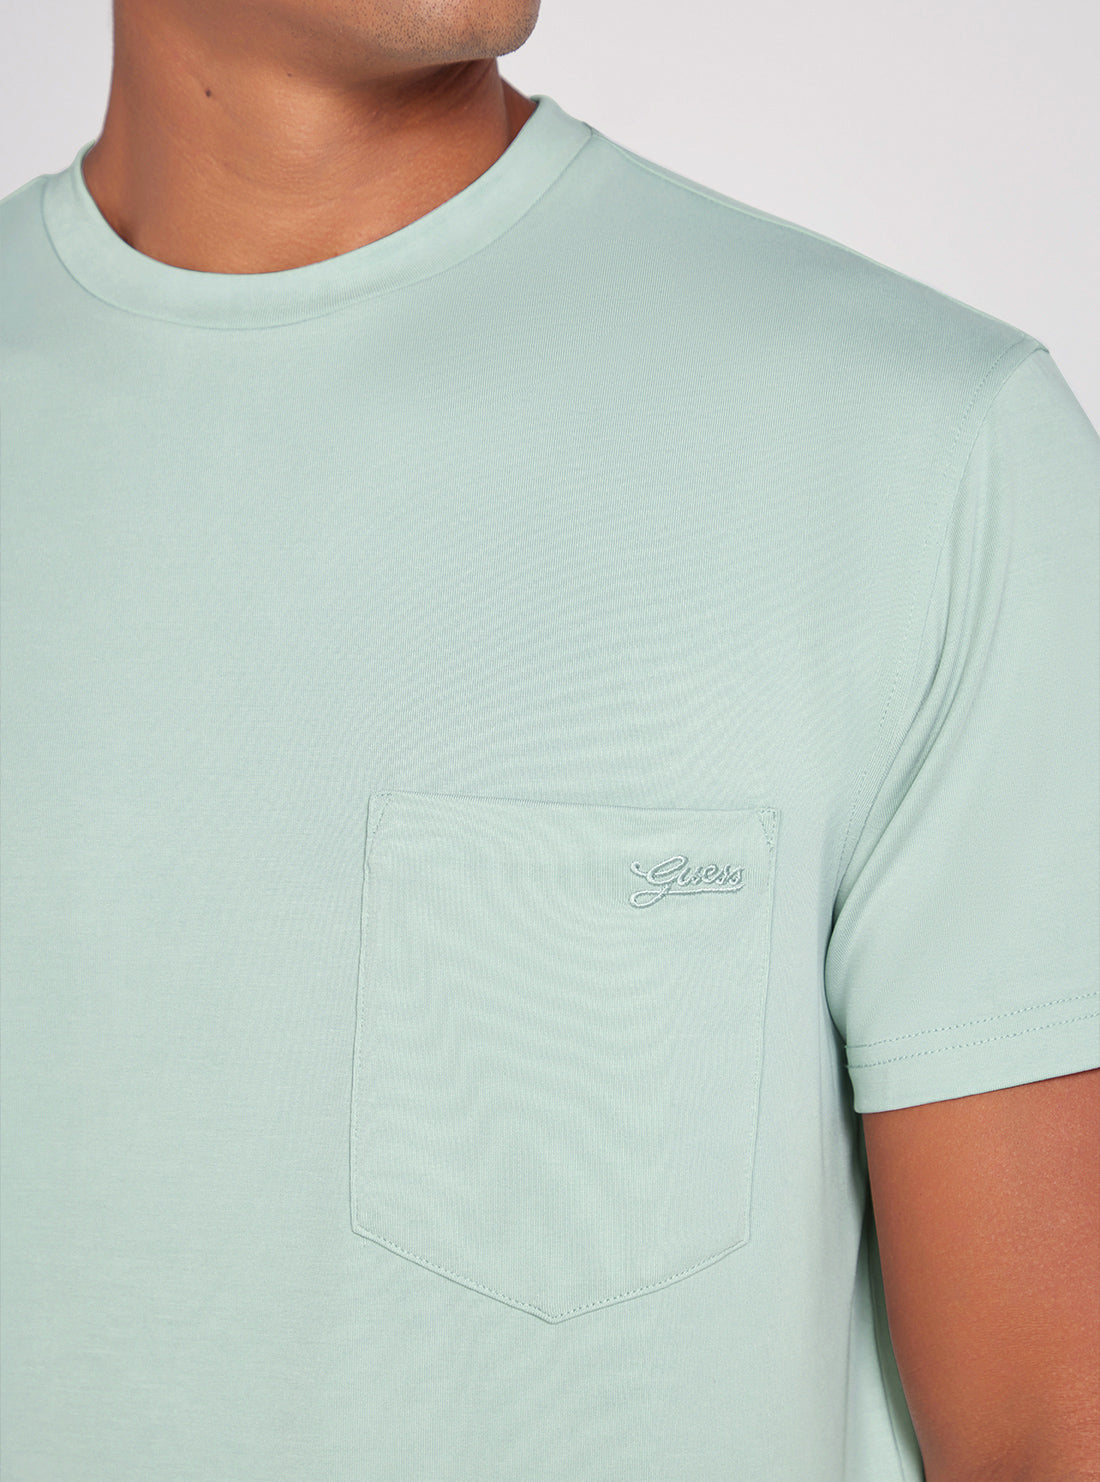 Mint Green Smooth T-Shirt | GUESS Men's Apparel | detail view